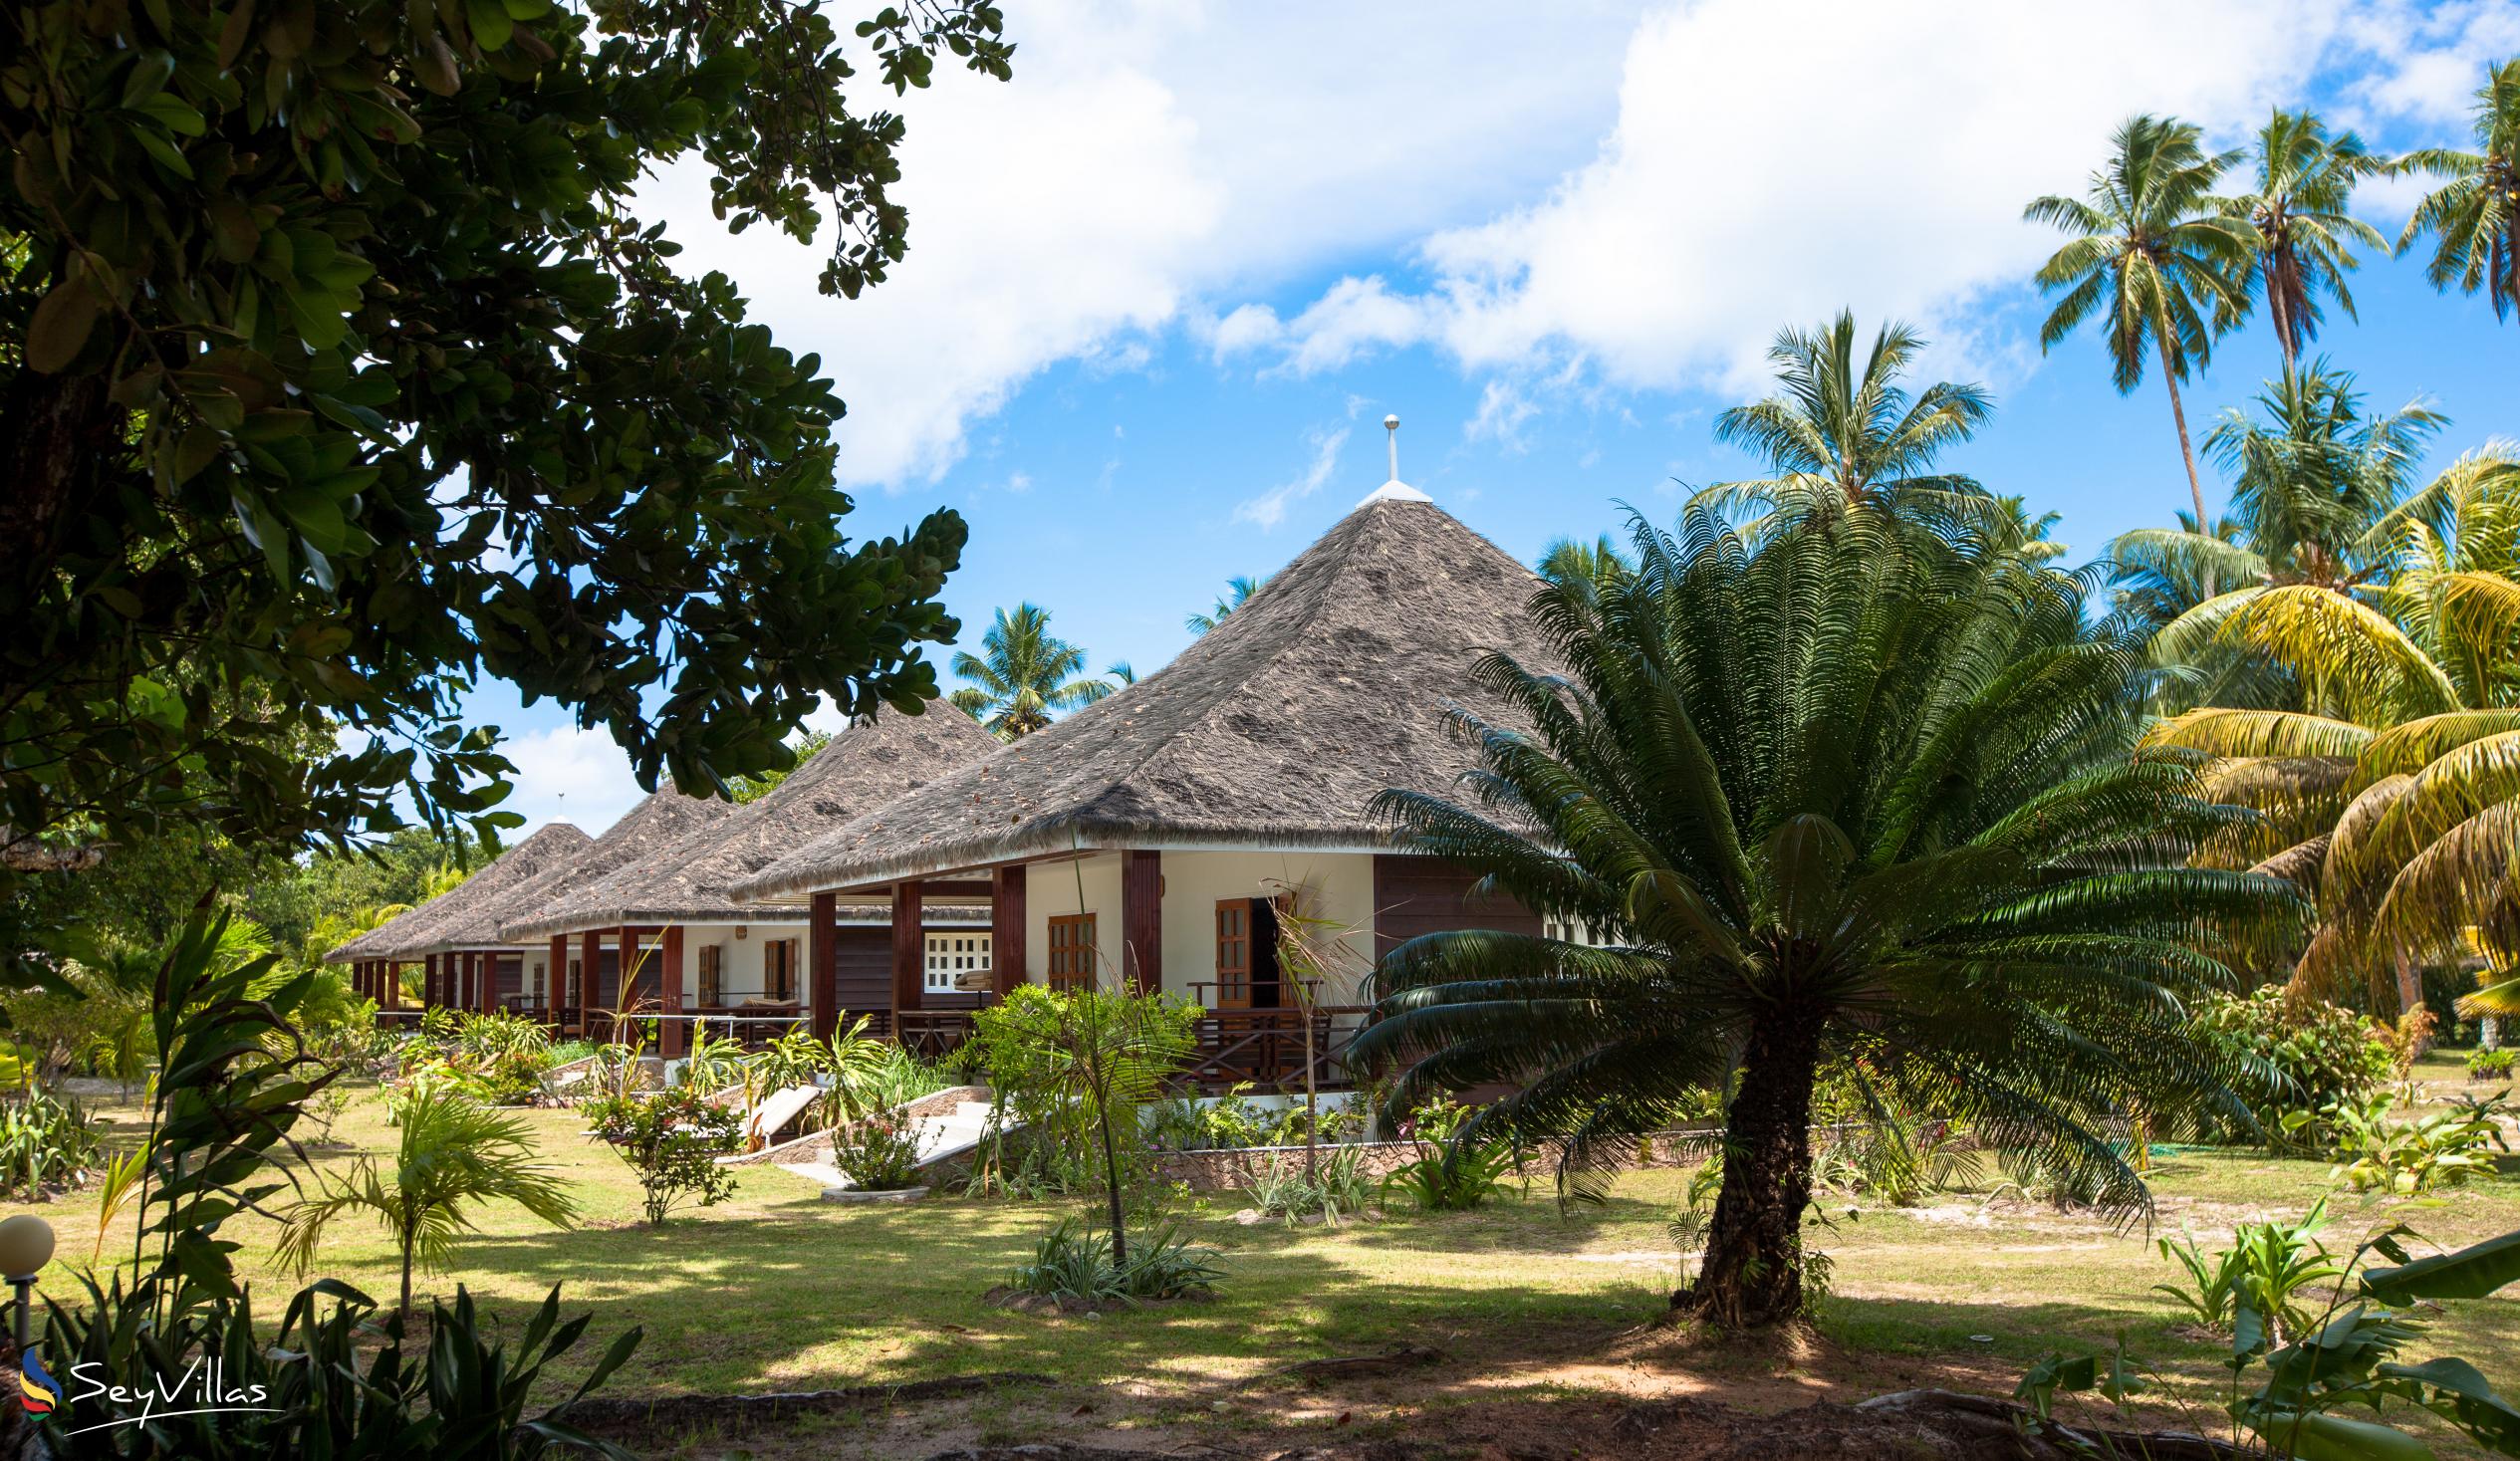 Photo 6: La Digue Island Lodge (L'Union Beach Villas) - Outdoor area - La Digue (Seychelles)